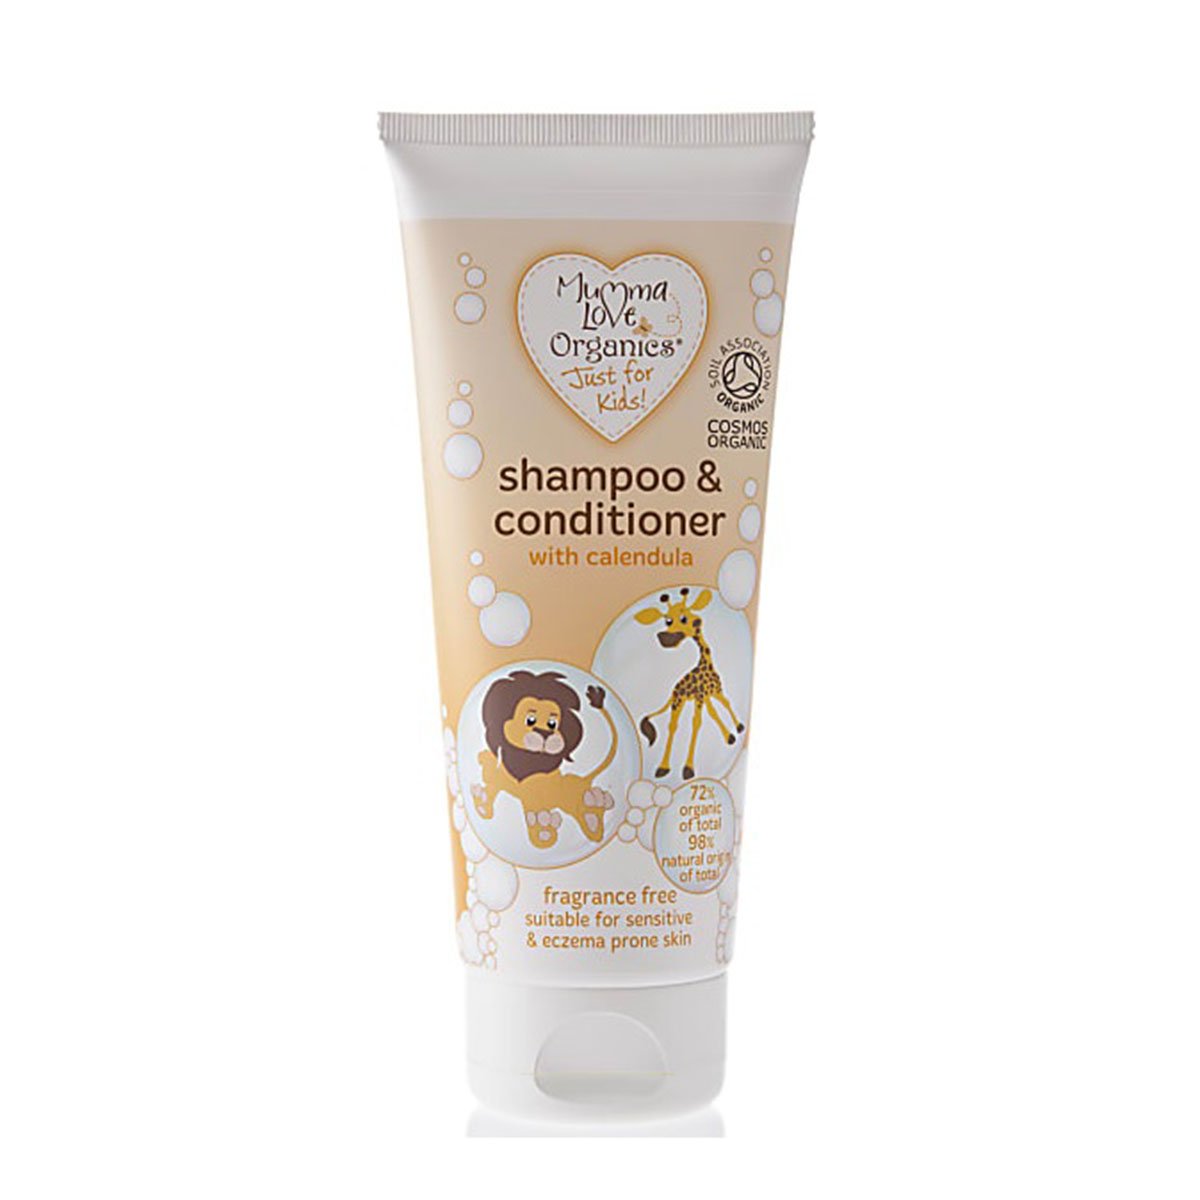 Mumma Loves Organics Kids Shampoo & Conditioner Fragrance Free with Calendula 200ml